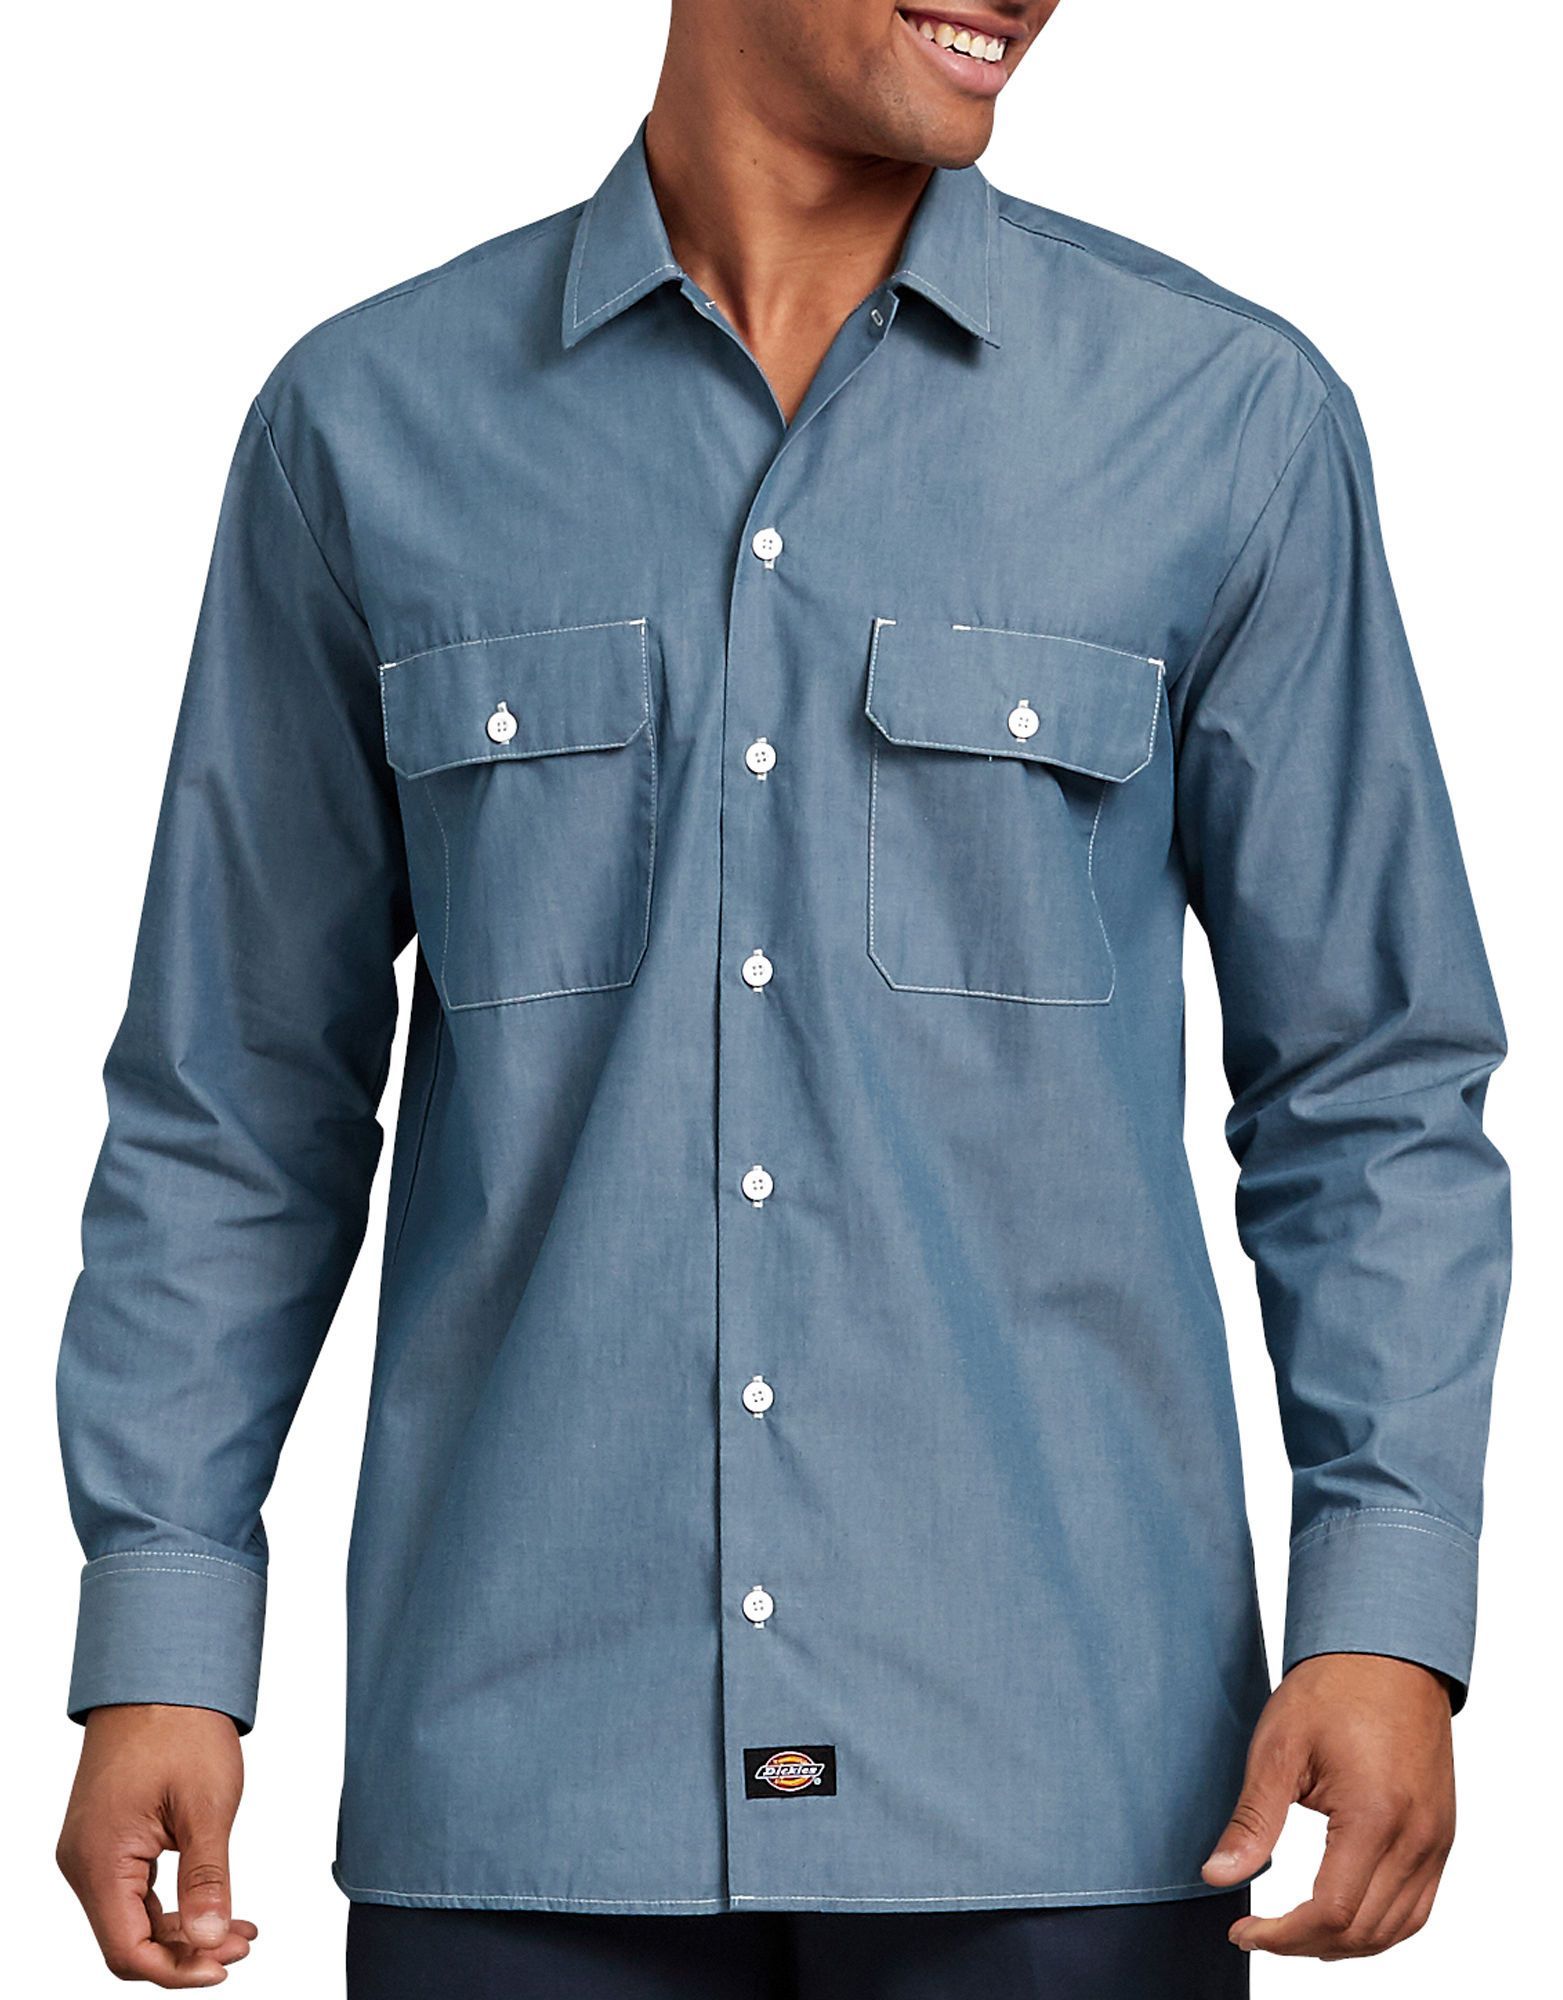 Buy Ls Chambray Shirt - Dickies Online at price - FL